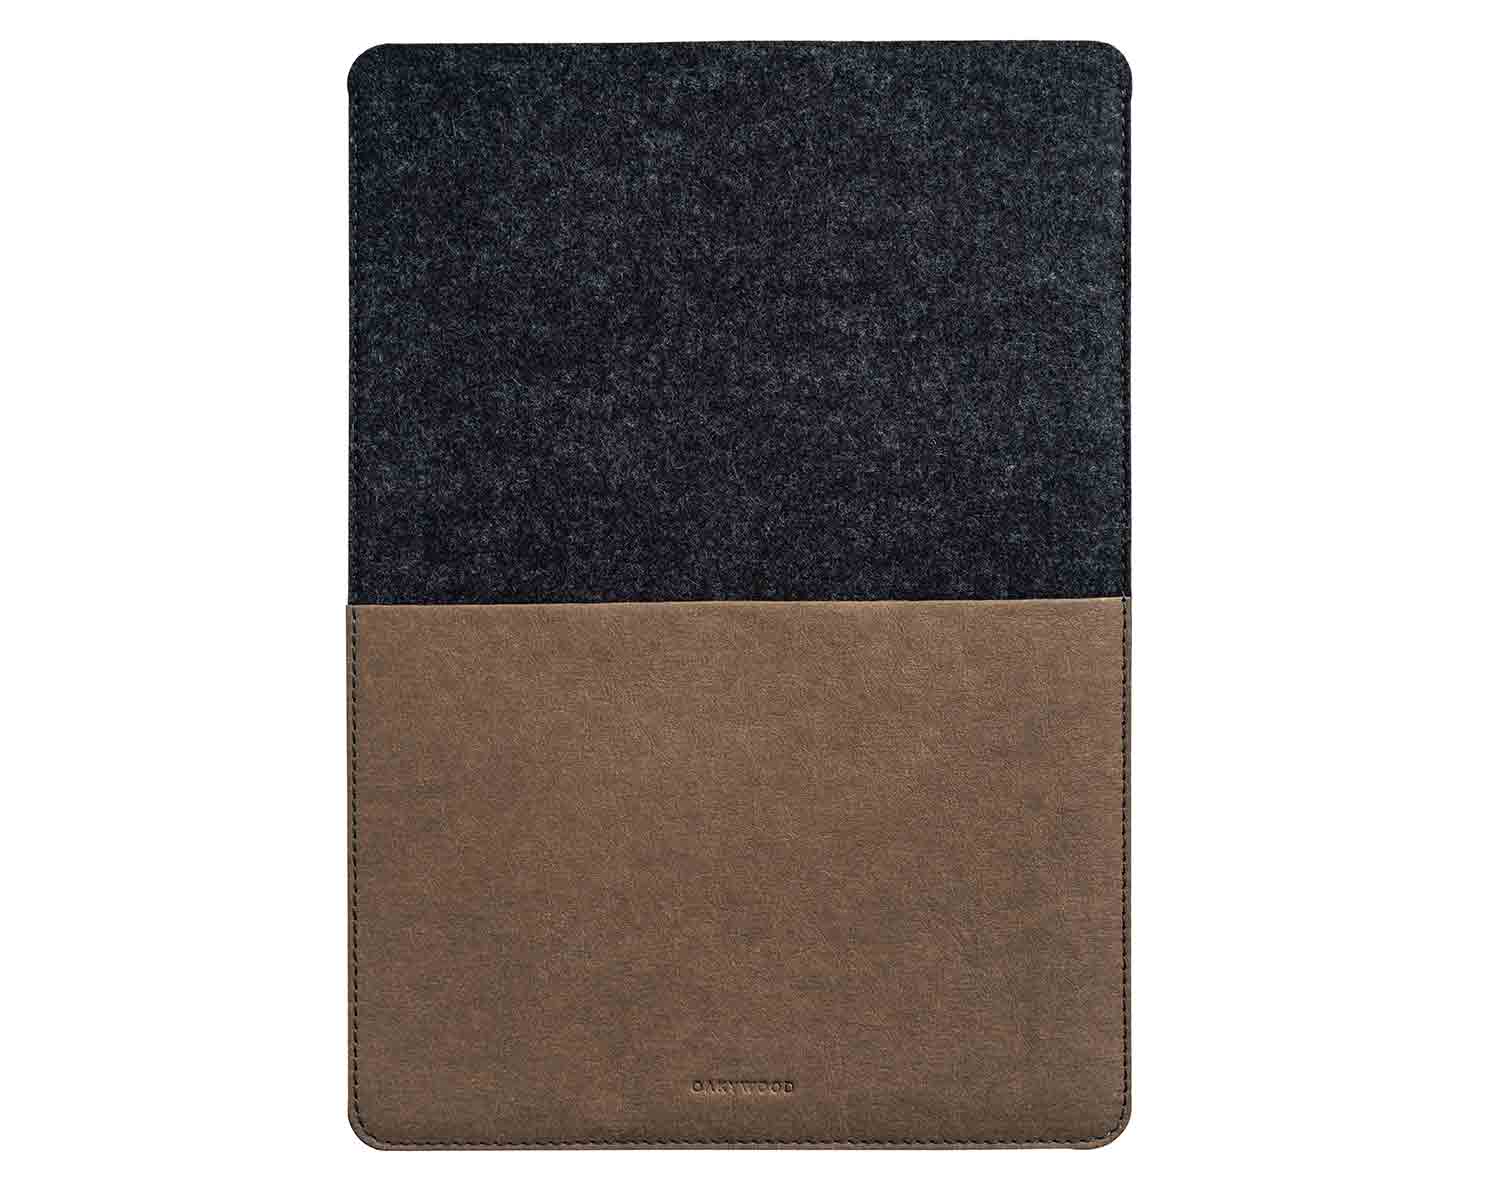 ipad macbook sleeves felt corkoak 450 16 inch black front